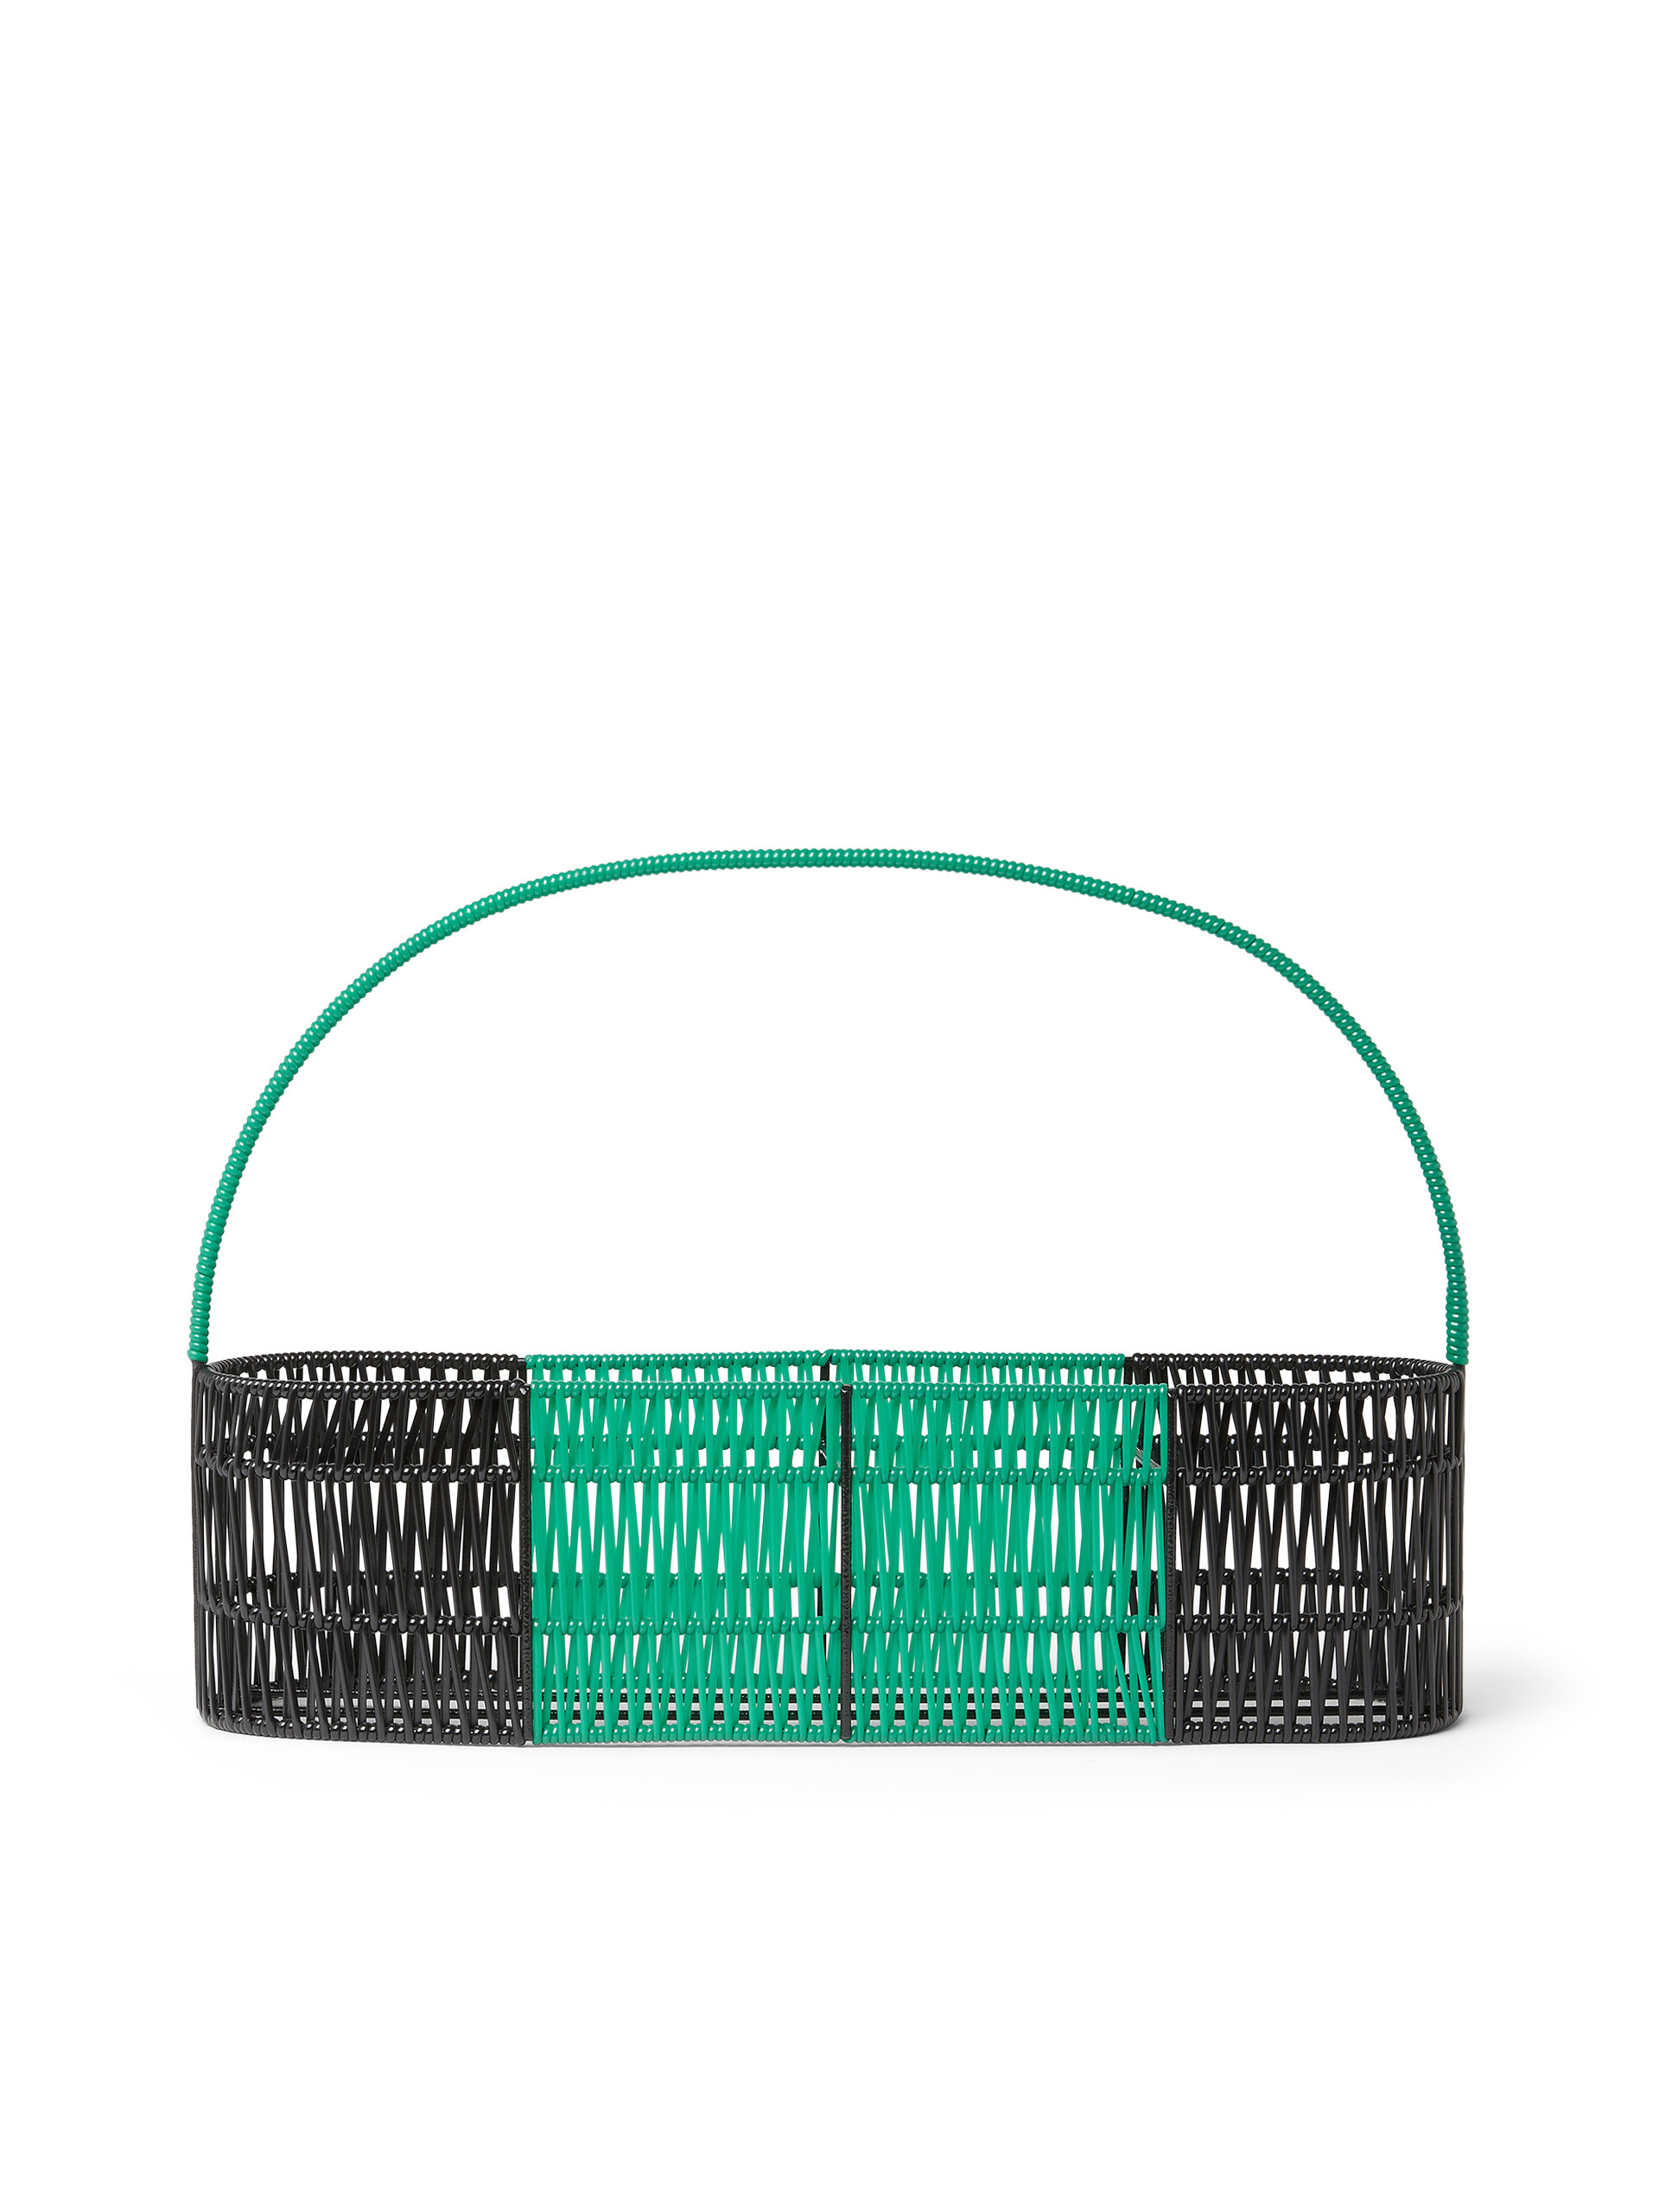 MARNI MARKET oval basket with long handle - Furniture - Image 3